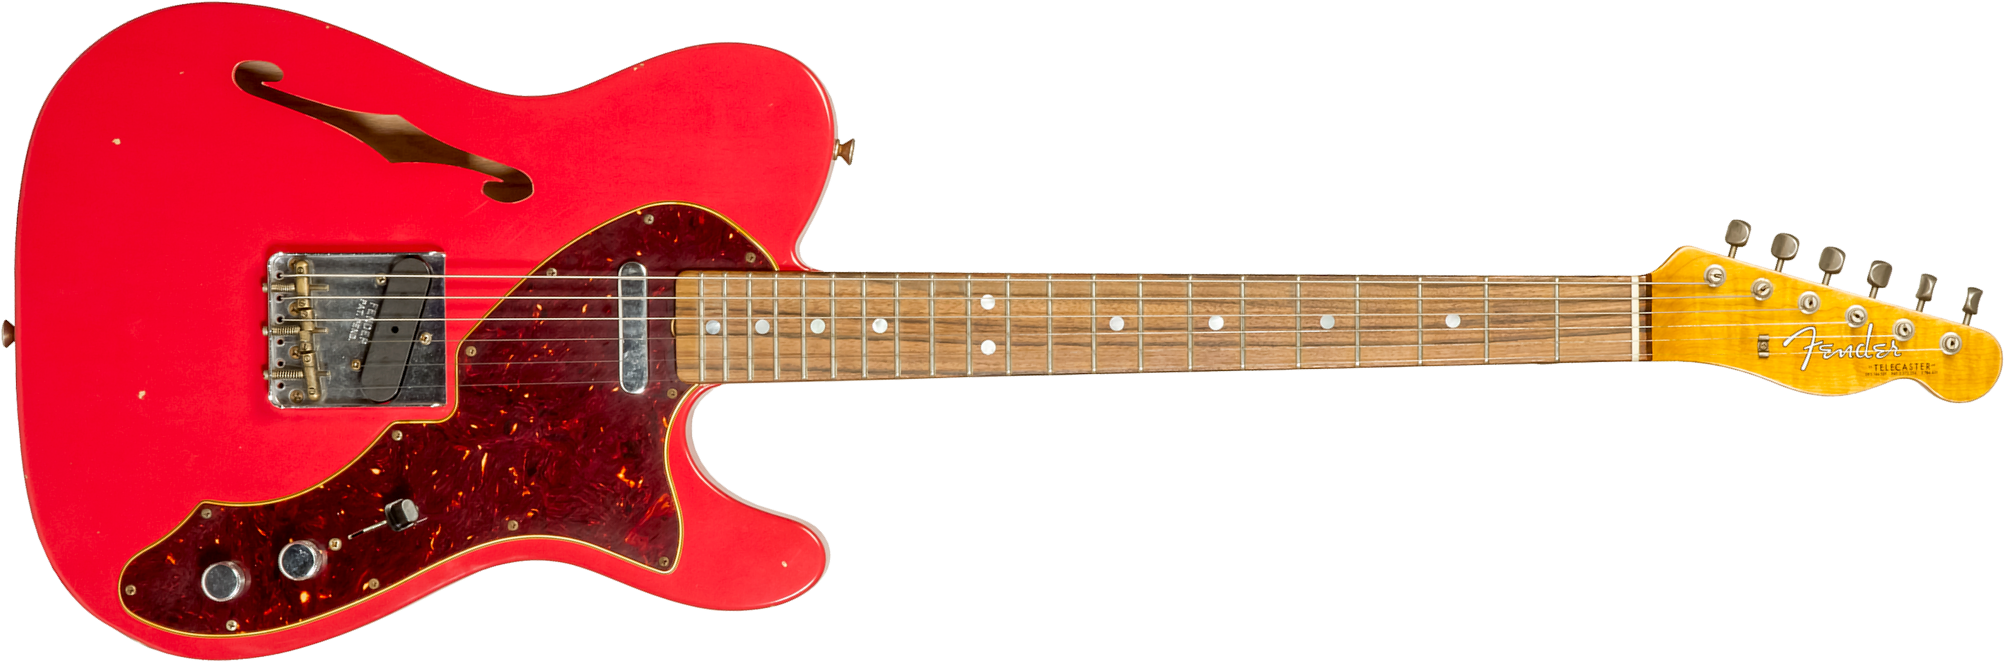 Fender Custom Shop Tele Thinline '60s Ltd 2s Ht Rw #cz544990 - Journeyman Relic Fiesta Red - Semi-Hollow E-Gitarre - Main picture